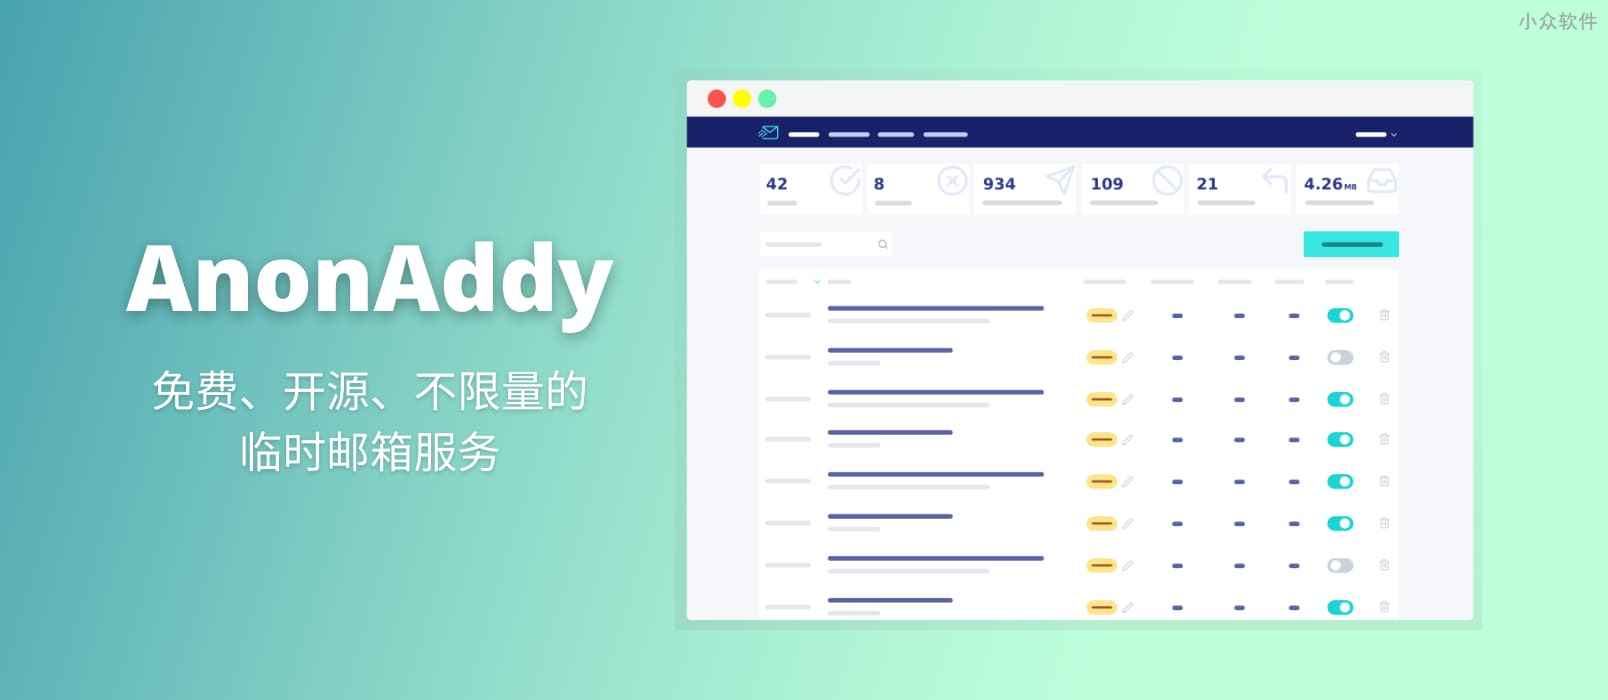 AnonAddy – 免费、开源、不限量的邮箱转发服务，支持 GPG 加密转发、自定义域名等功能